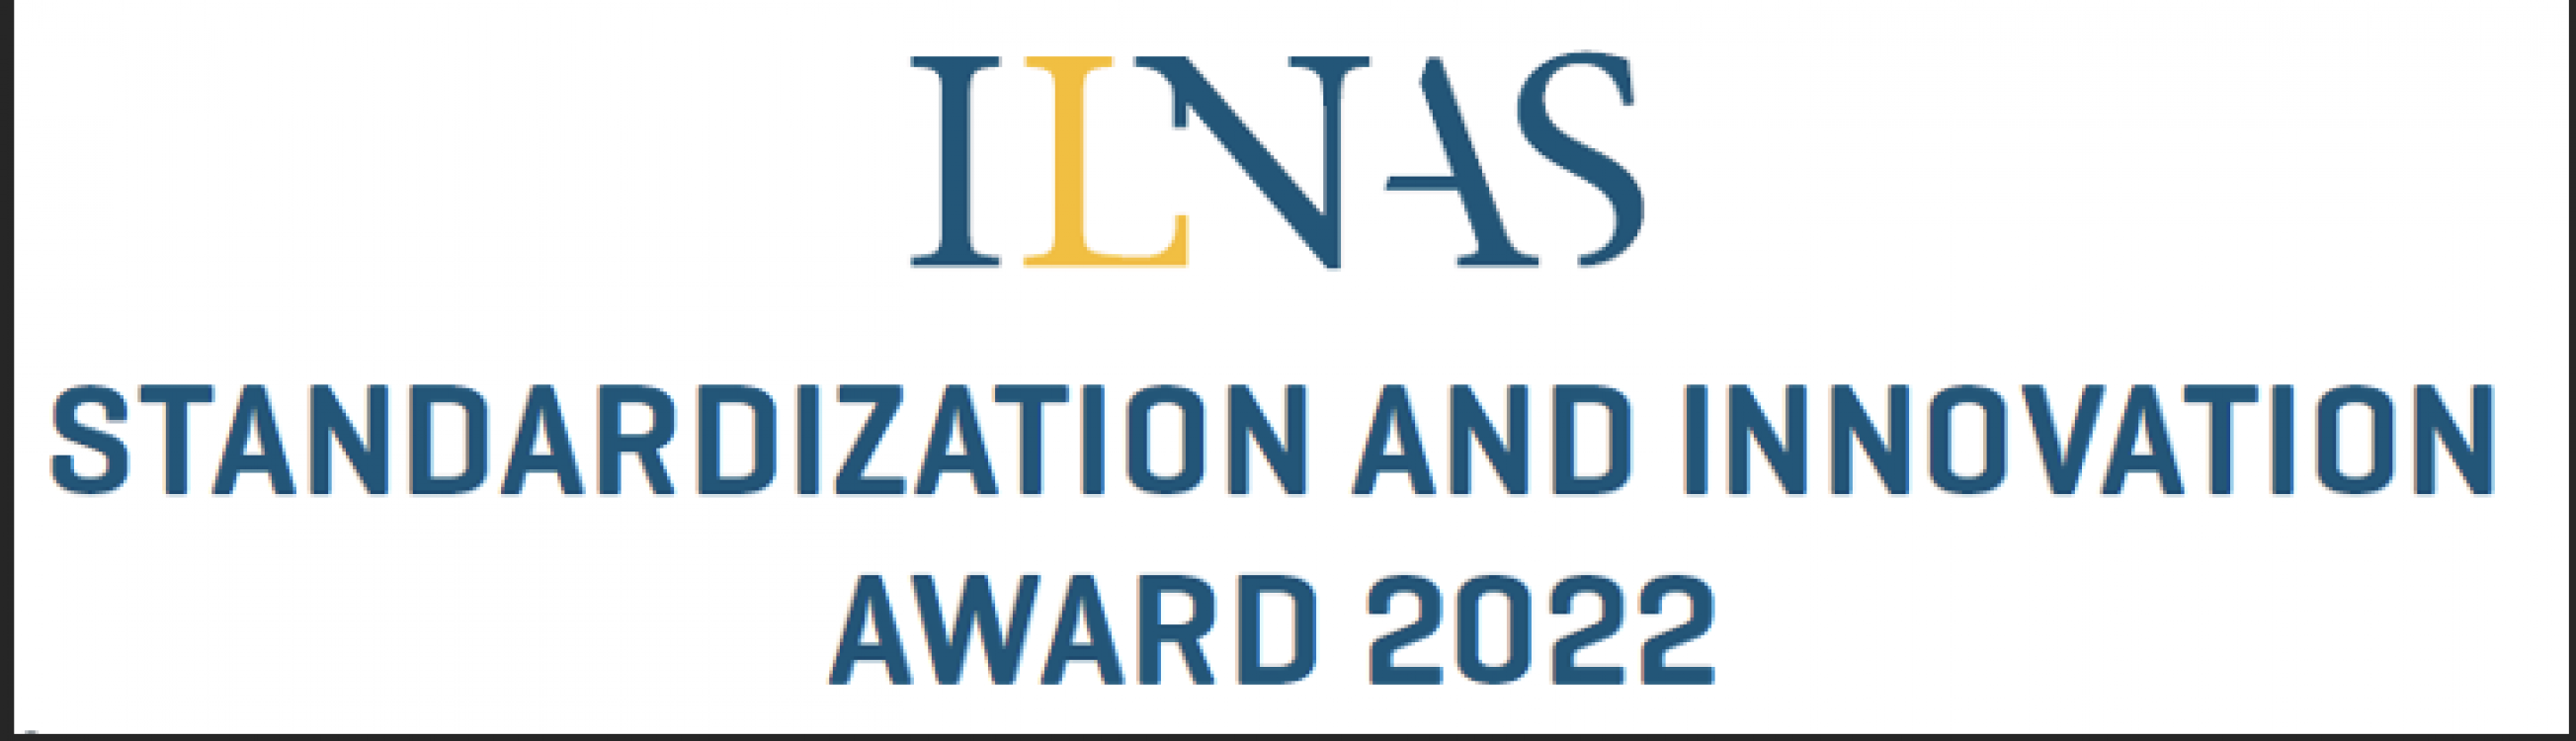 ILNAS Standardization & Innovation Award